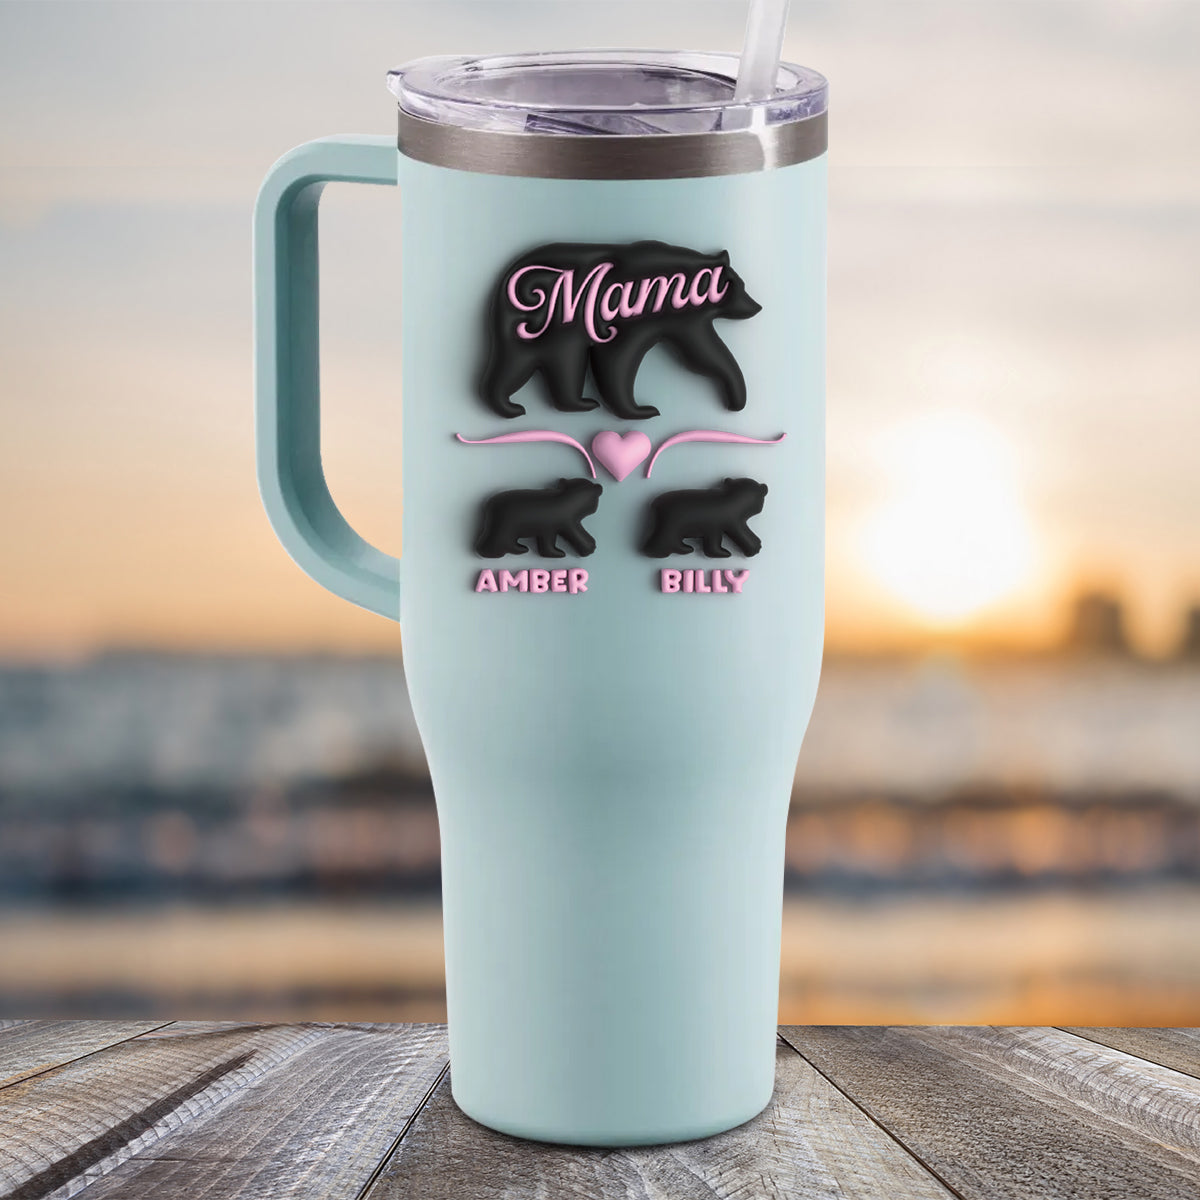 Father's Day Bear Plush & Papa Bear Ceramic Mug Gift Set - Way to